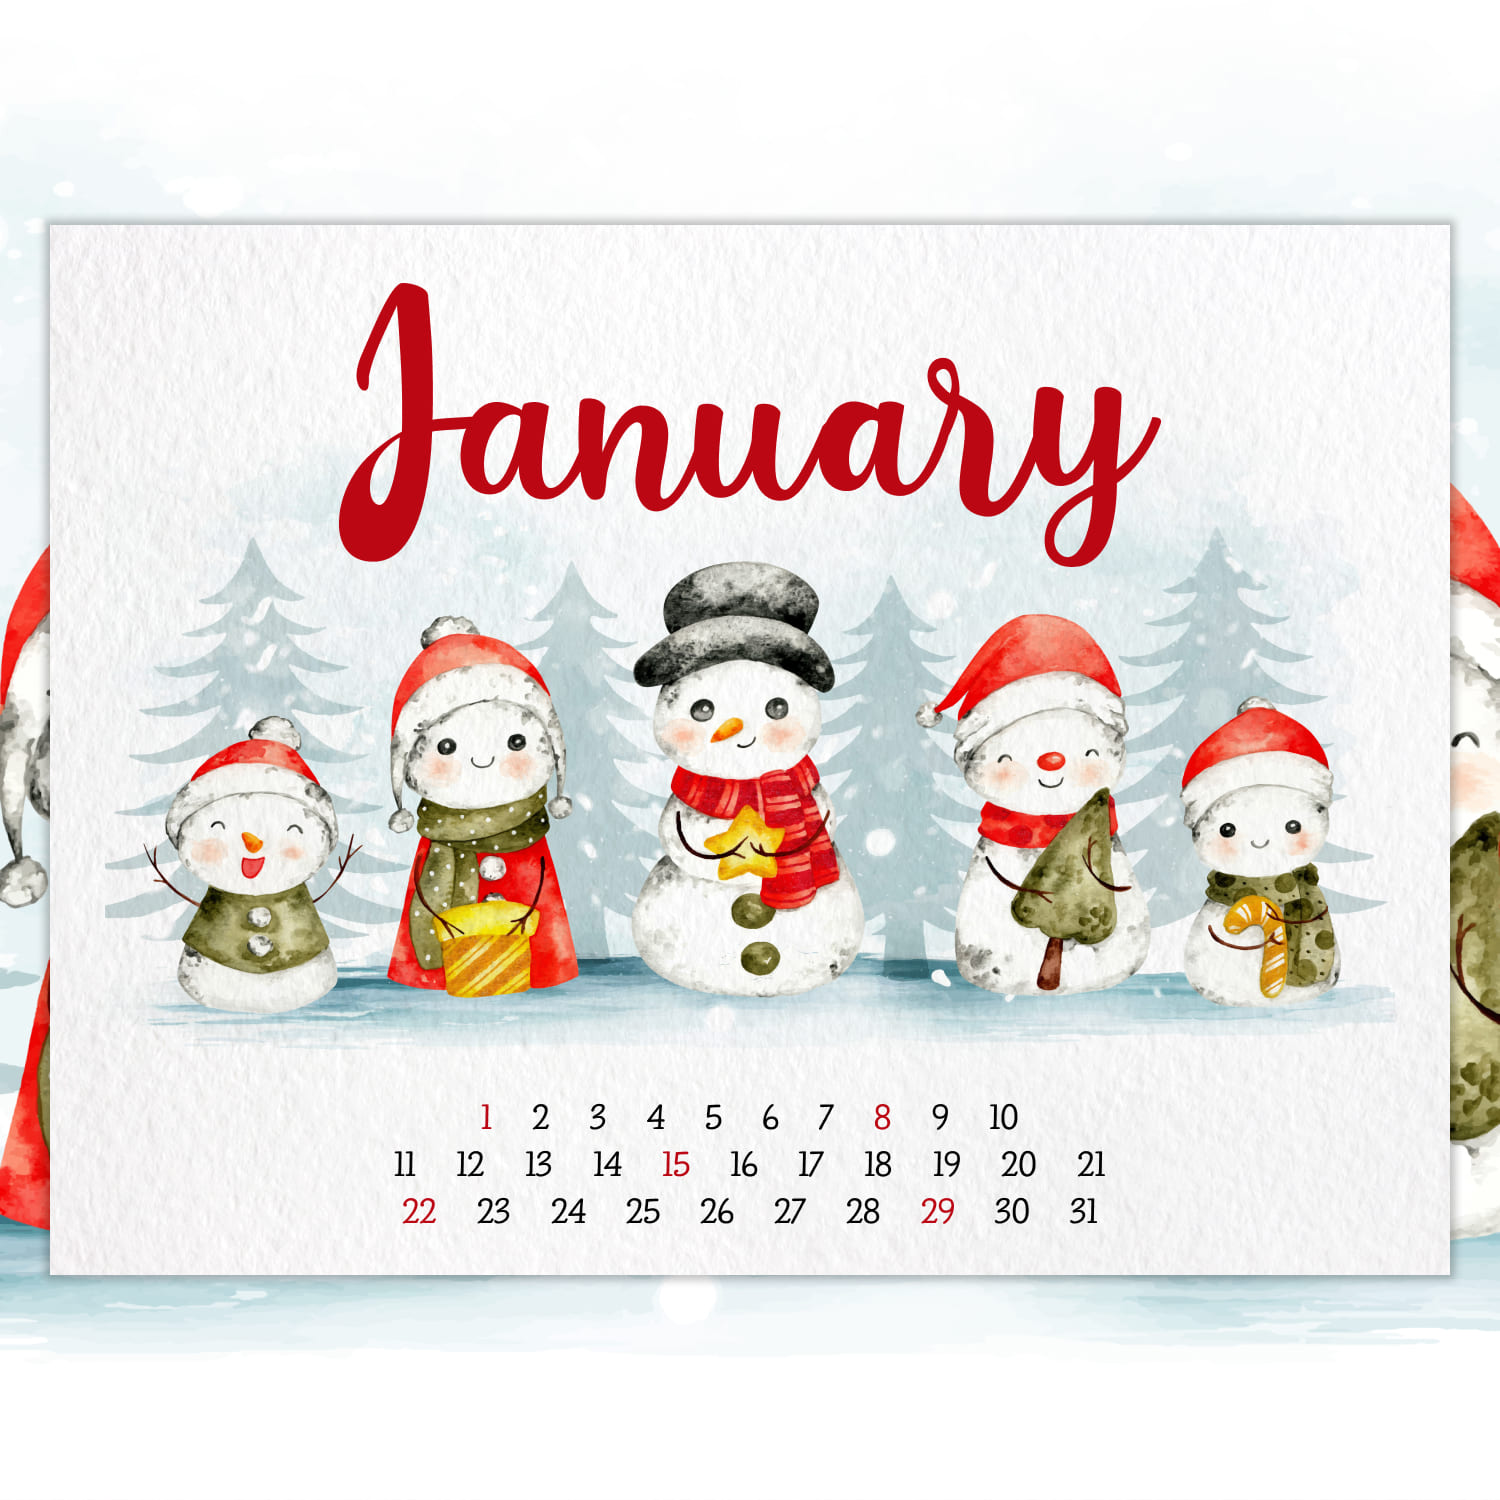 Free January Calendar cover.